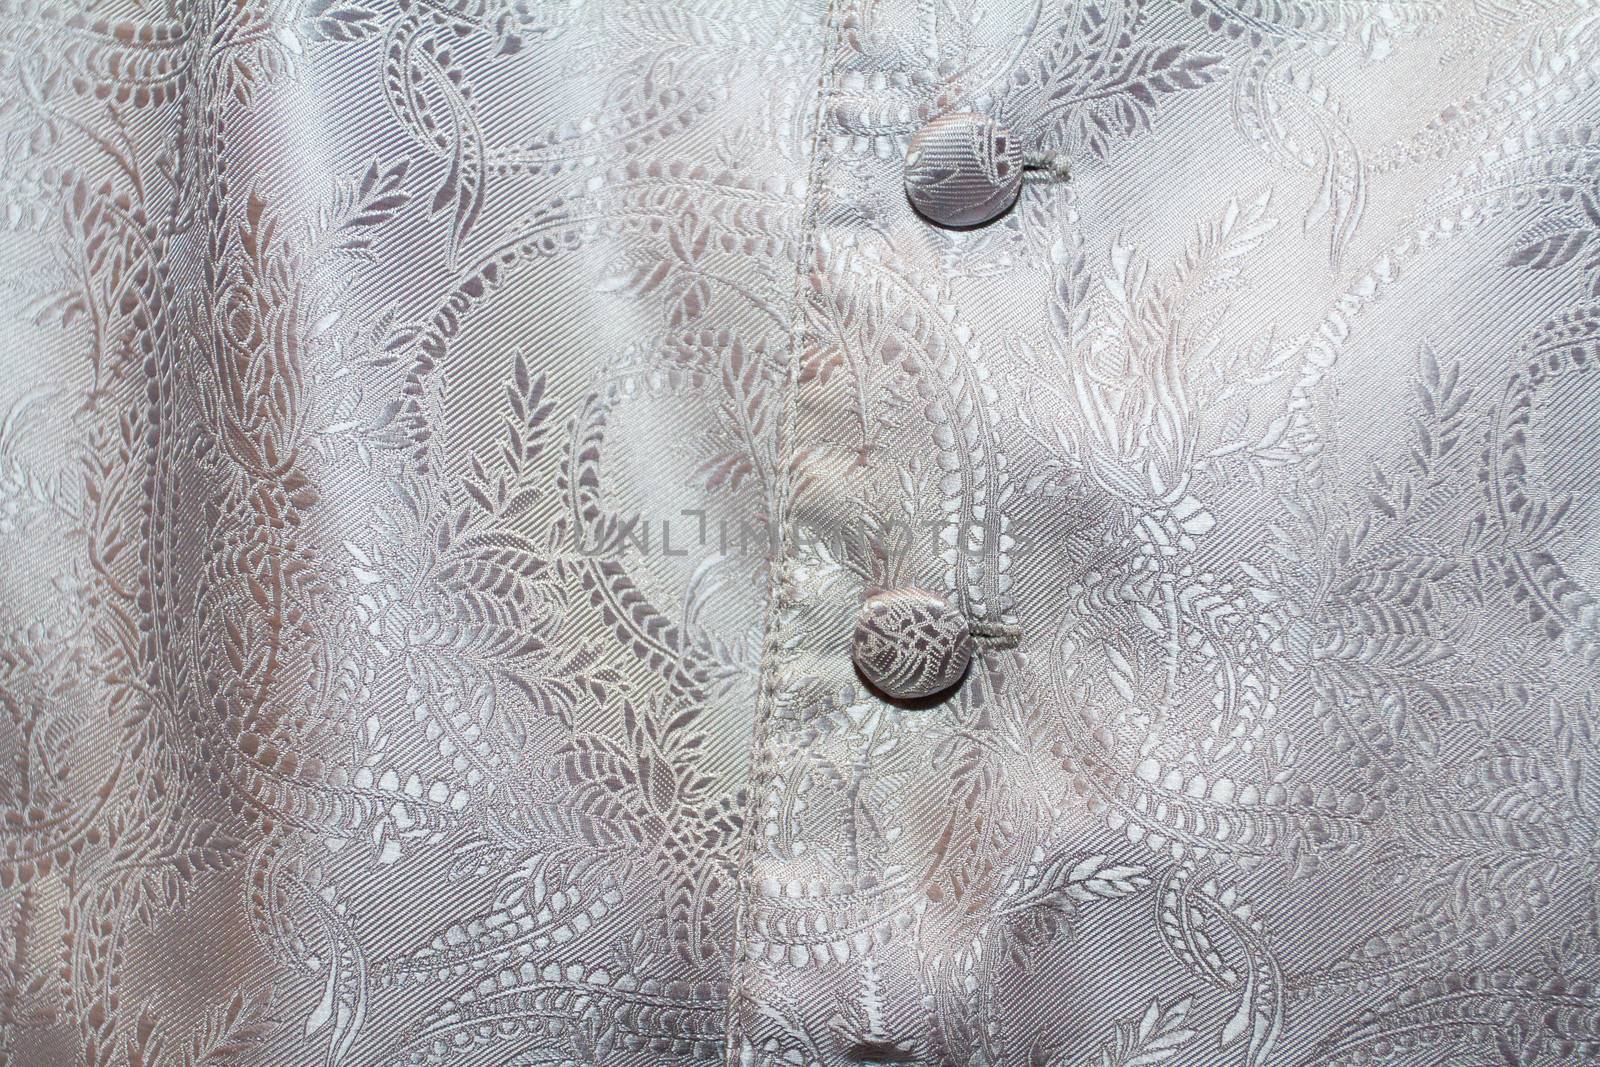 Groomsmen Tuxed Vest Detail by joshuaraineyphotography